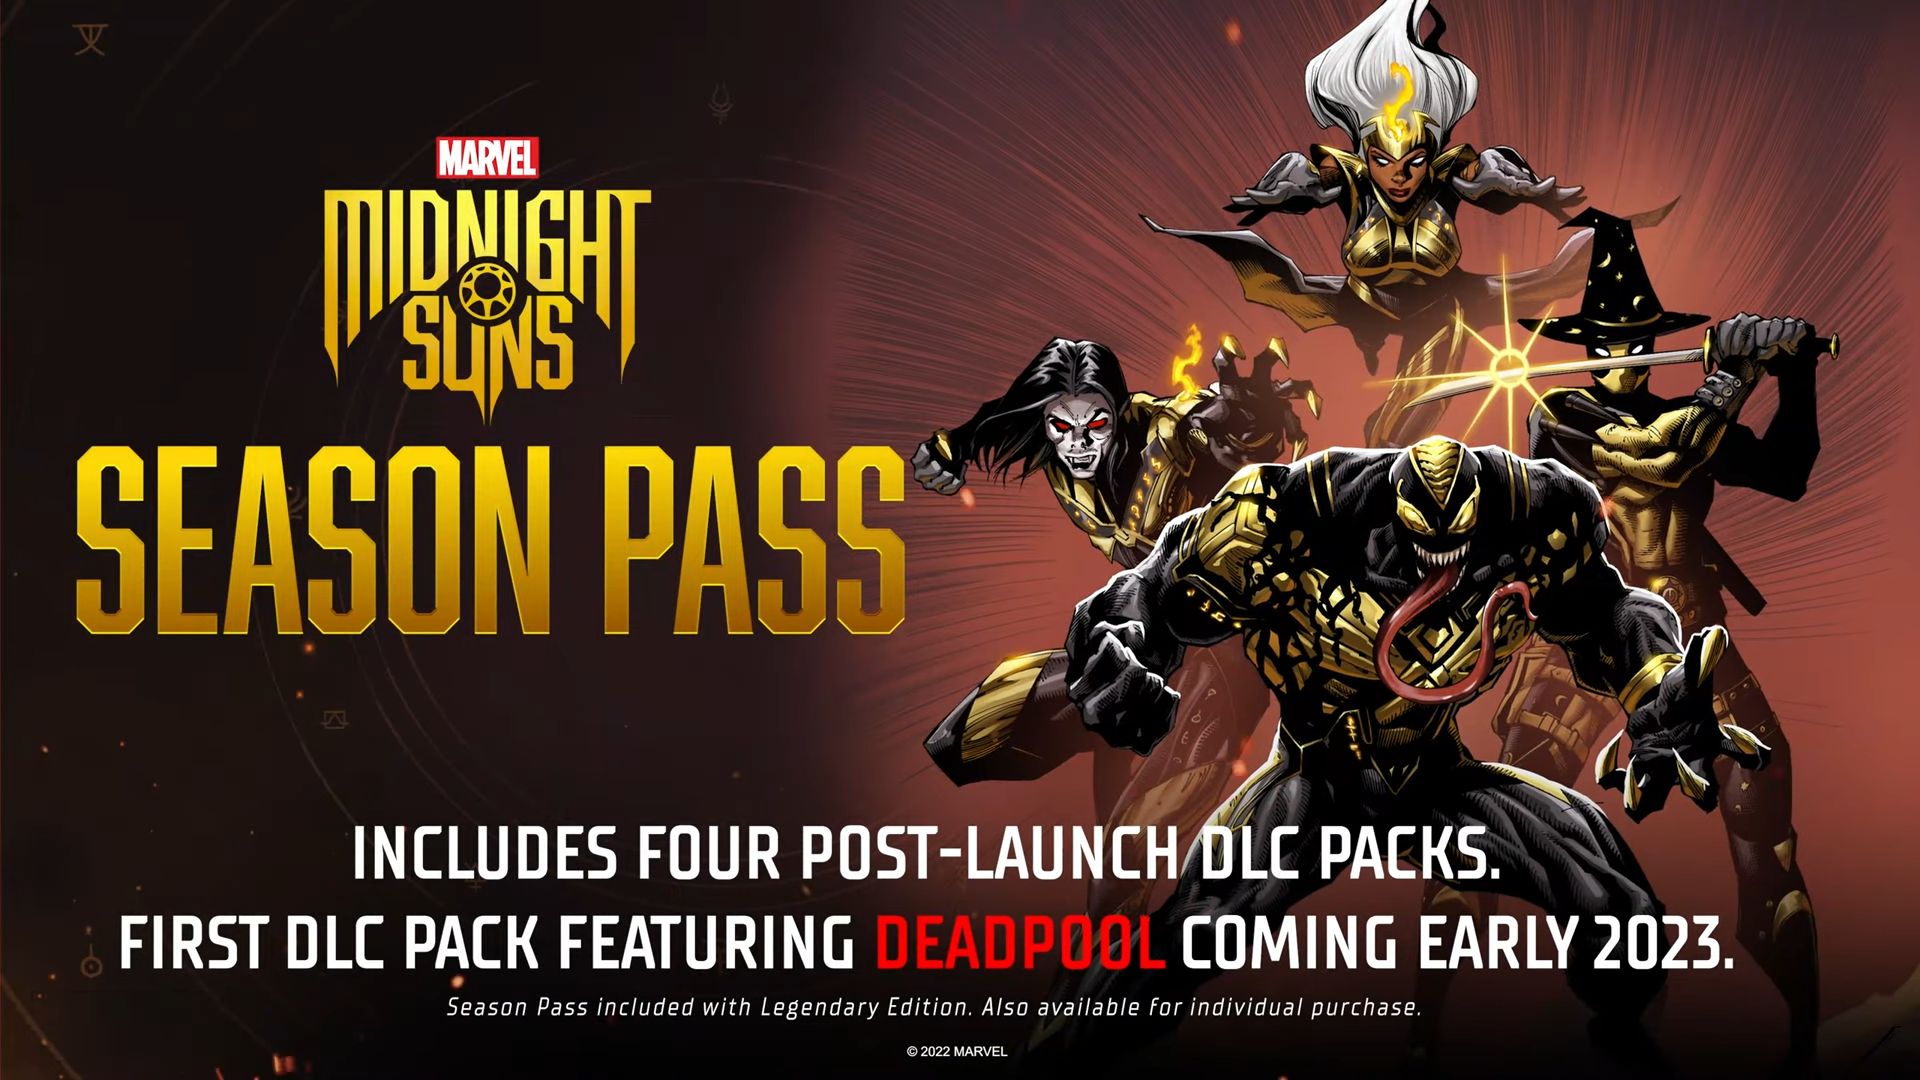 How to unlock Deadpool in Marvel's Midnight Suns